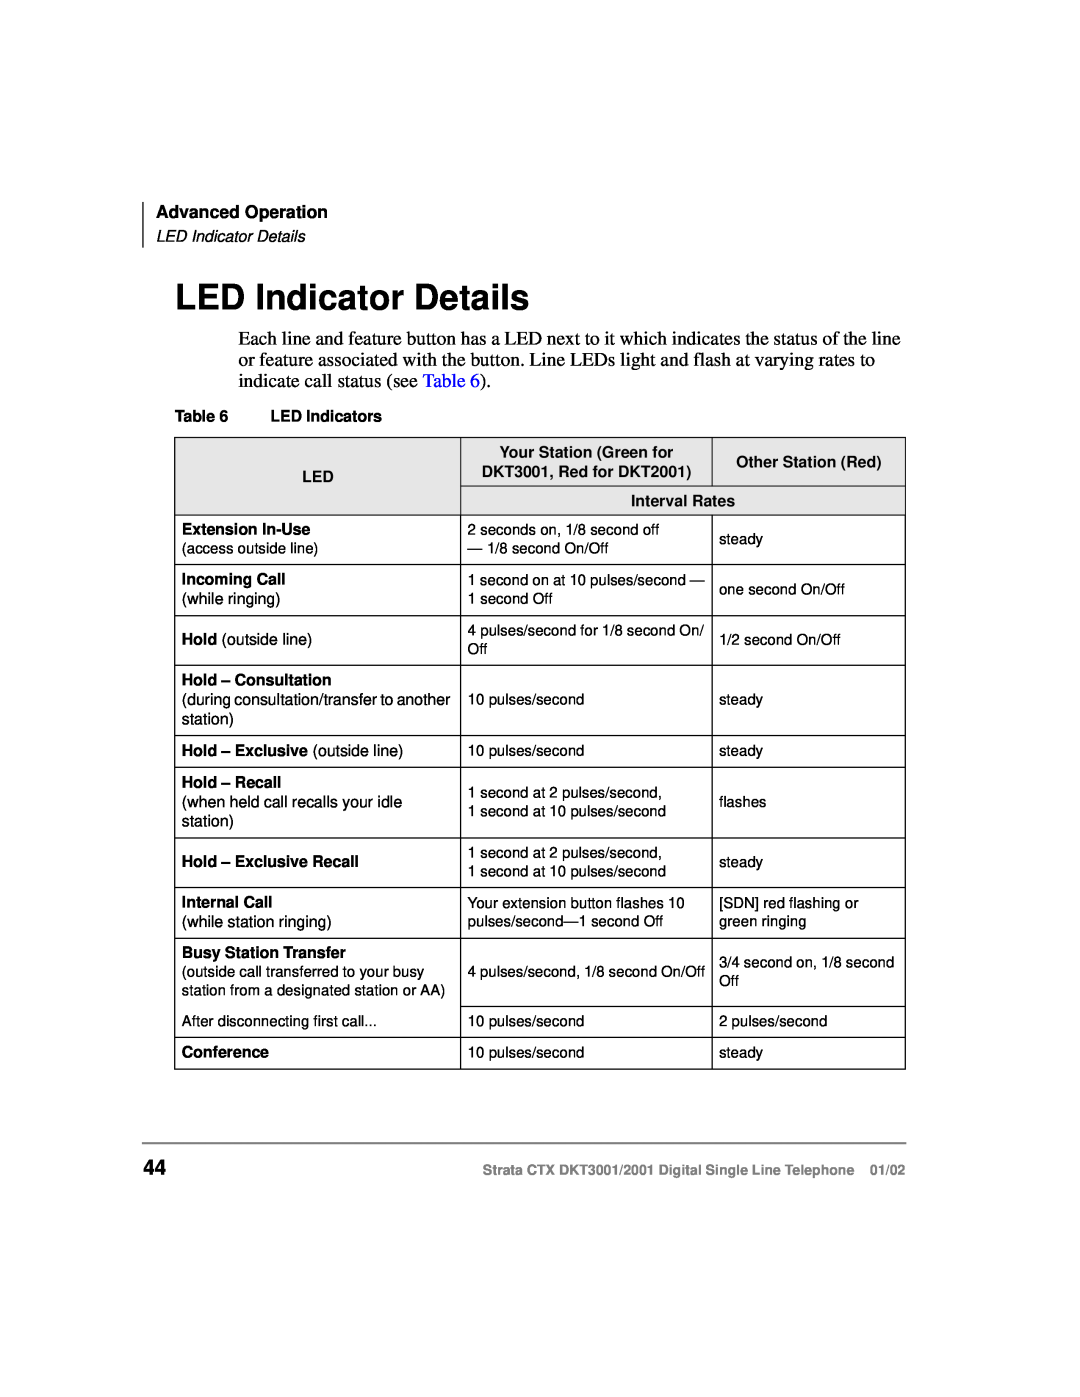 Toshiba DXT3001, 2001 manual LED Indicator Details, Advanced Operation 